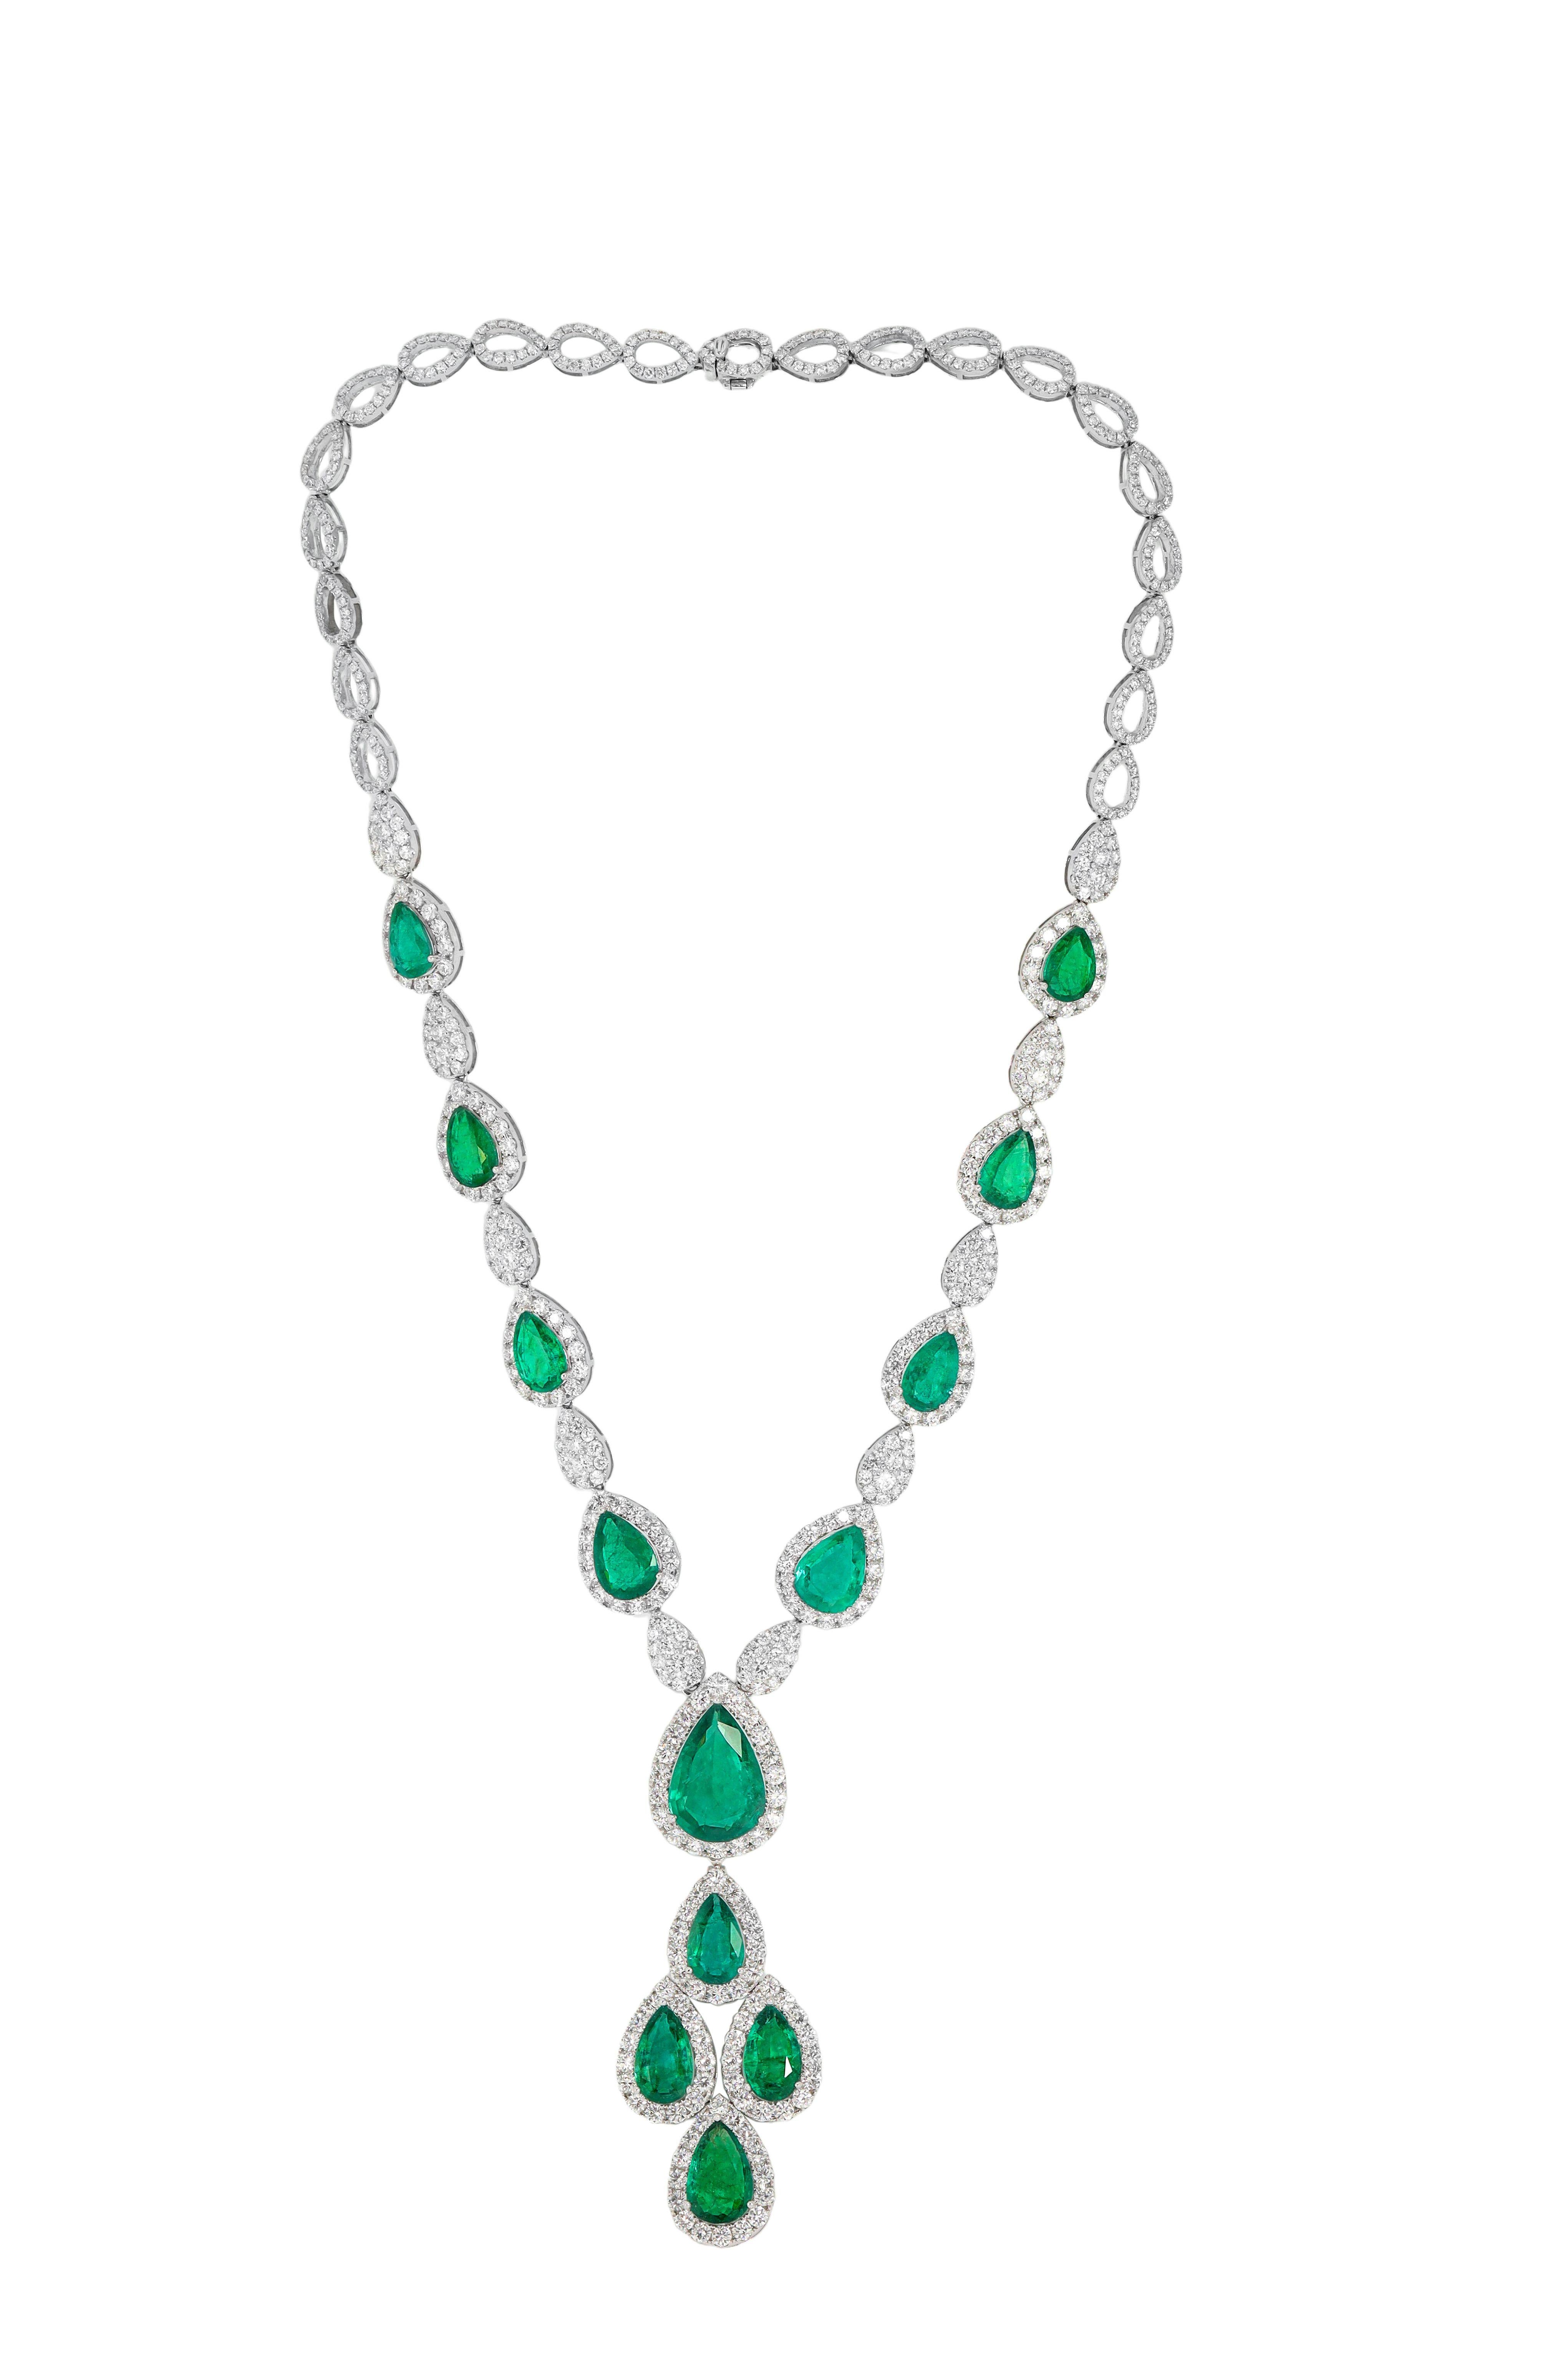 Pear Cut Diana M. Certified 32.19 Carat Emerald and Diamond Drop Necklace For Sale